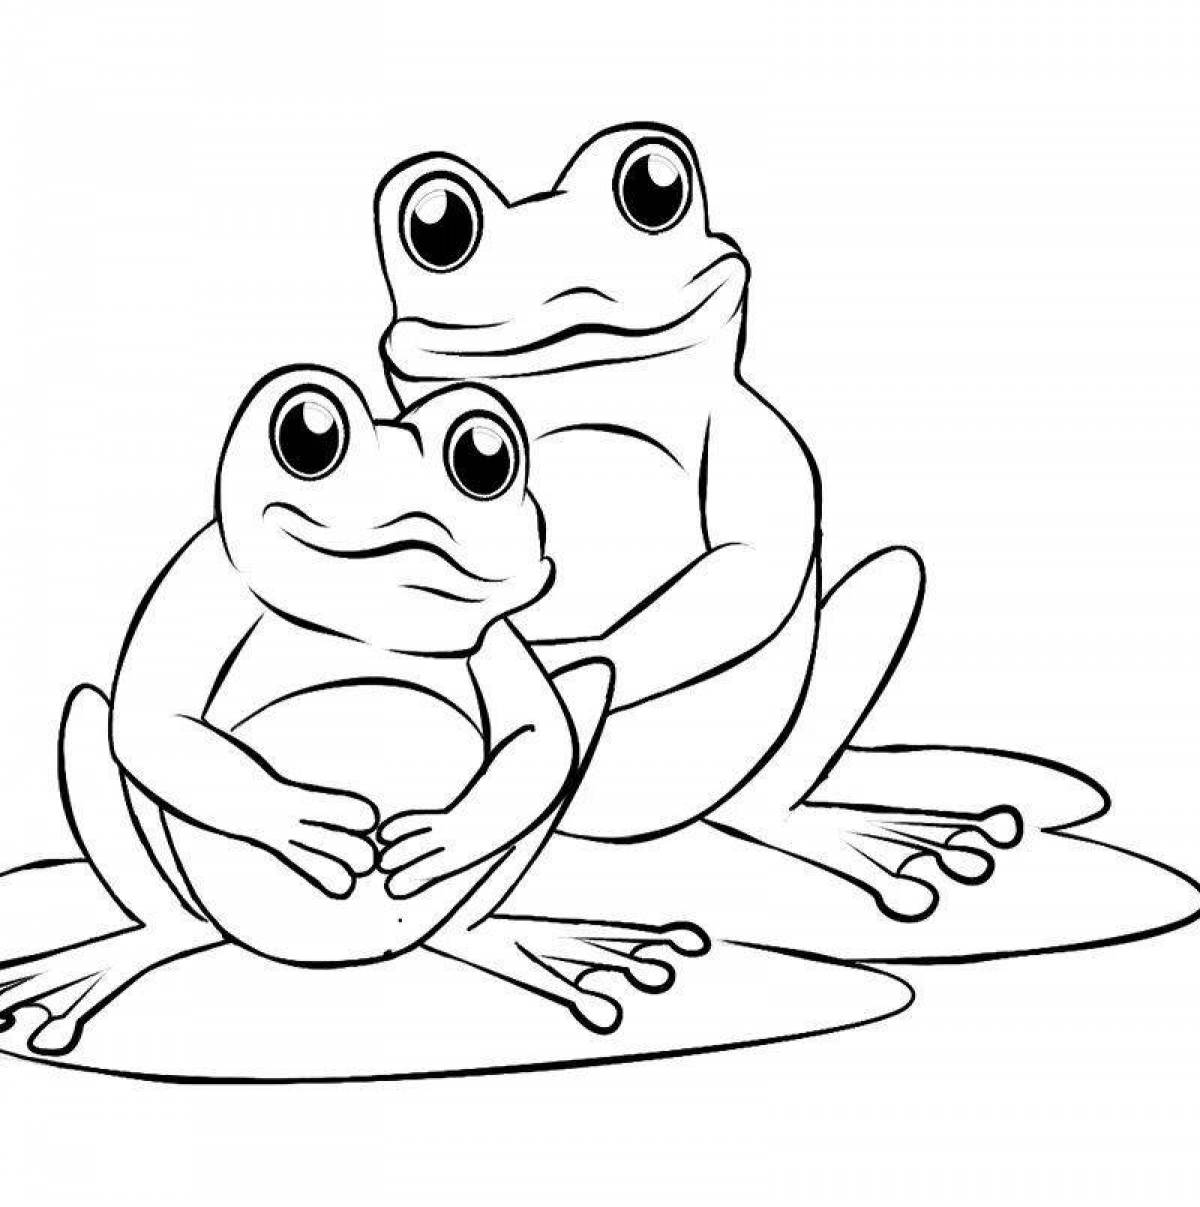 Smiling cute frog coloring book